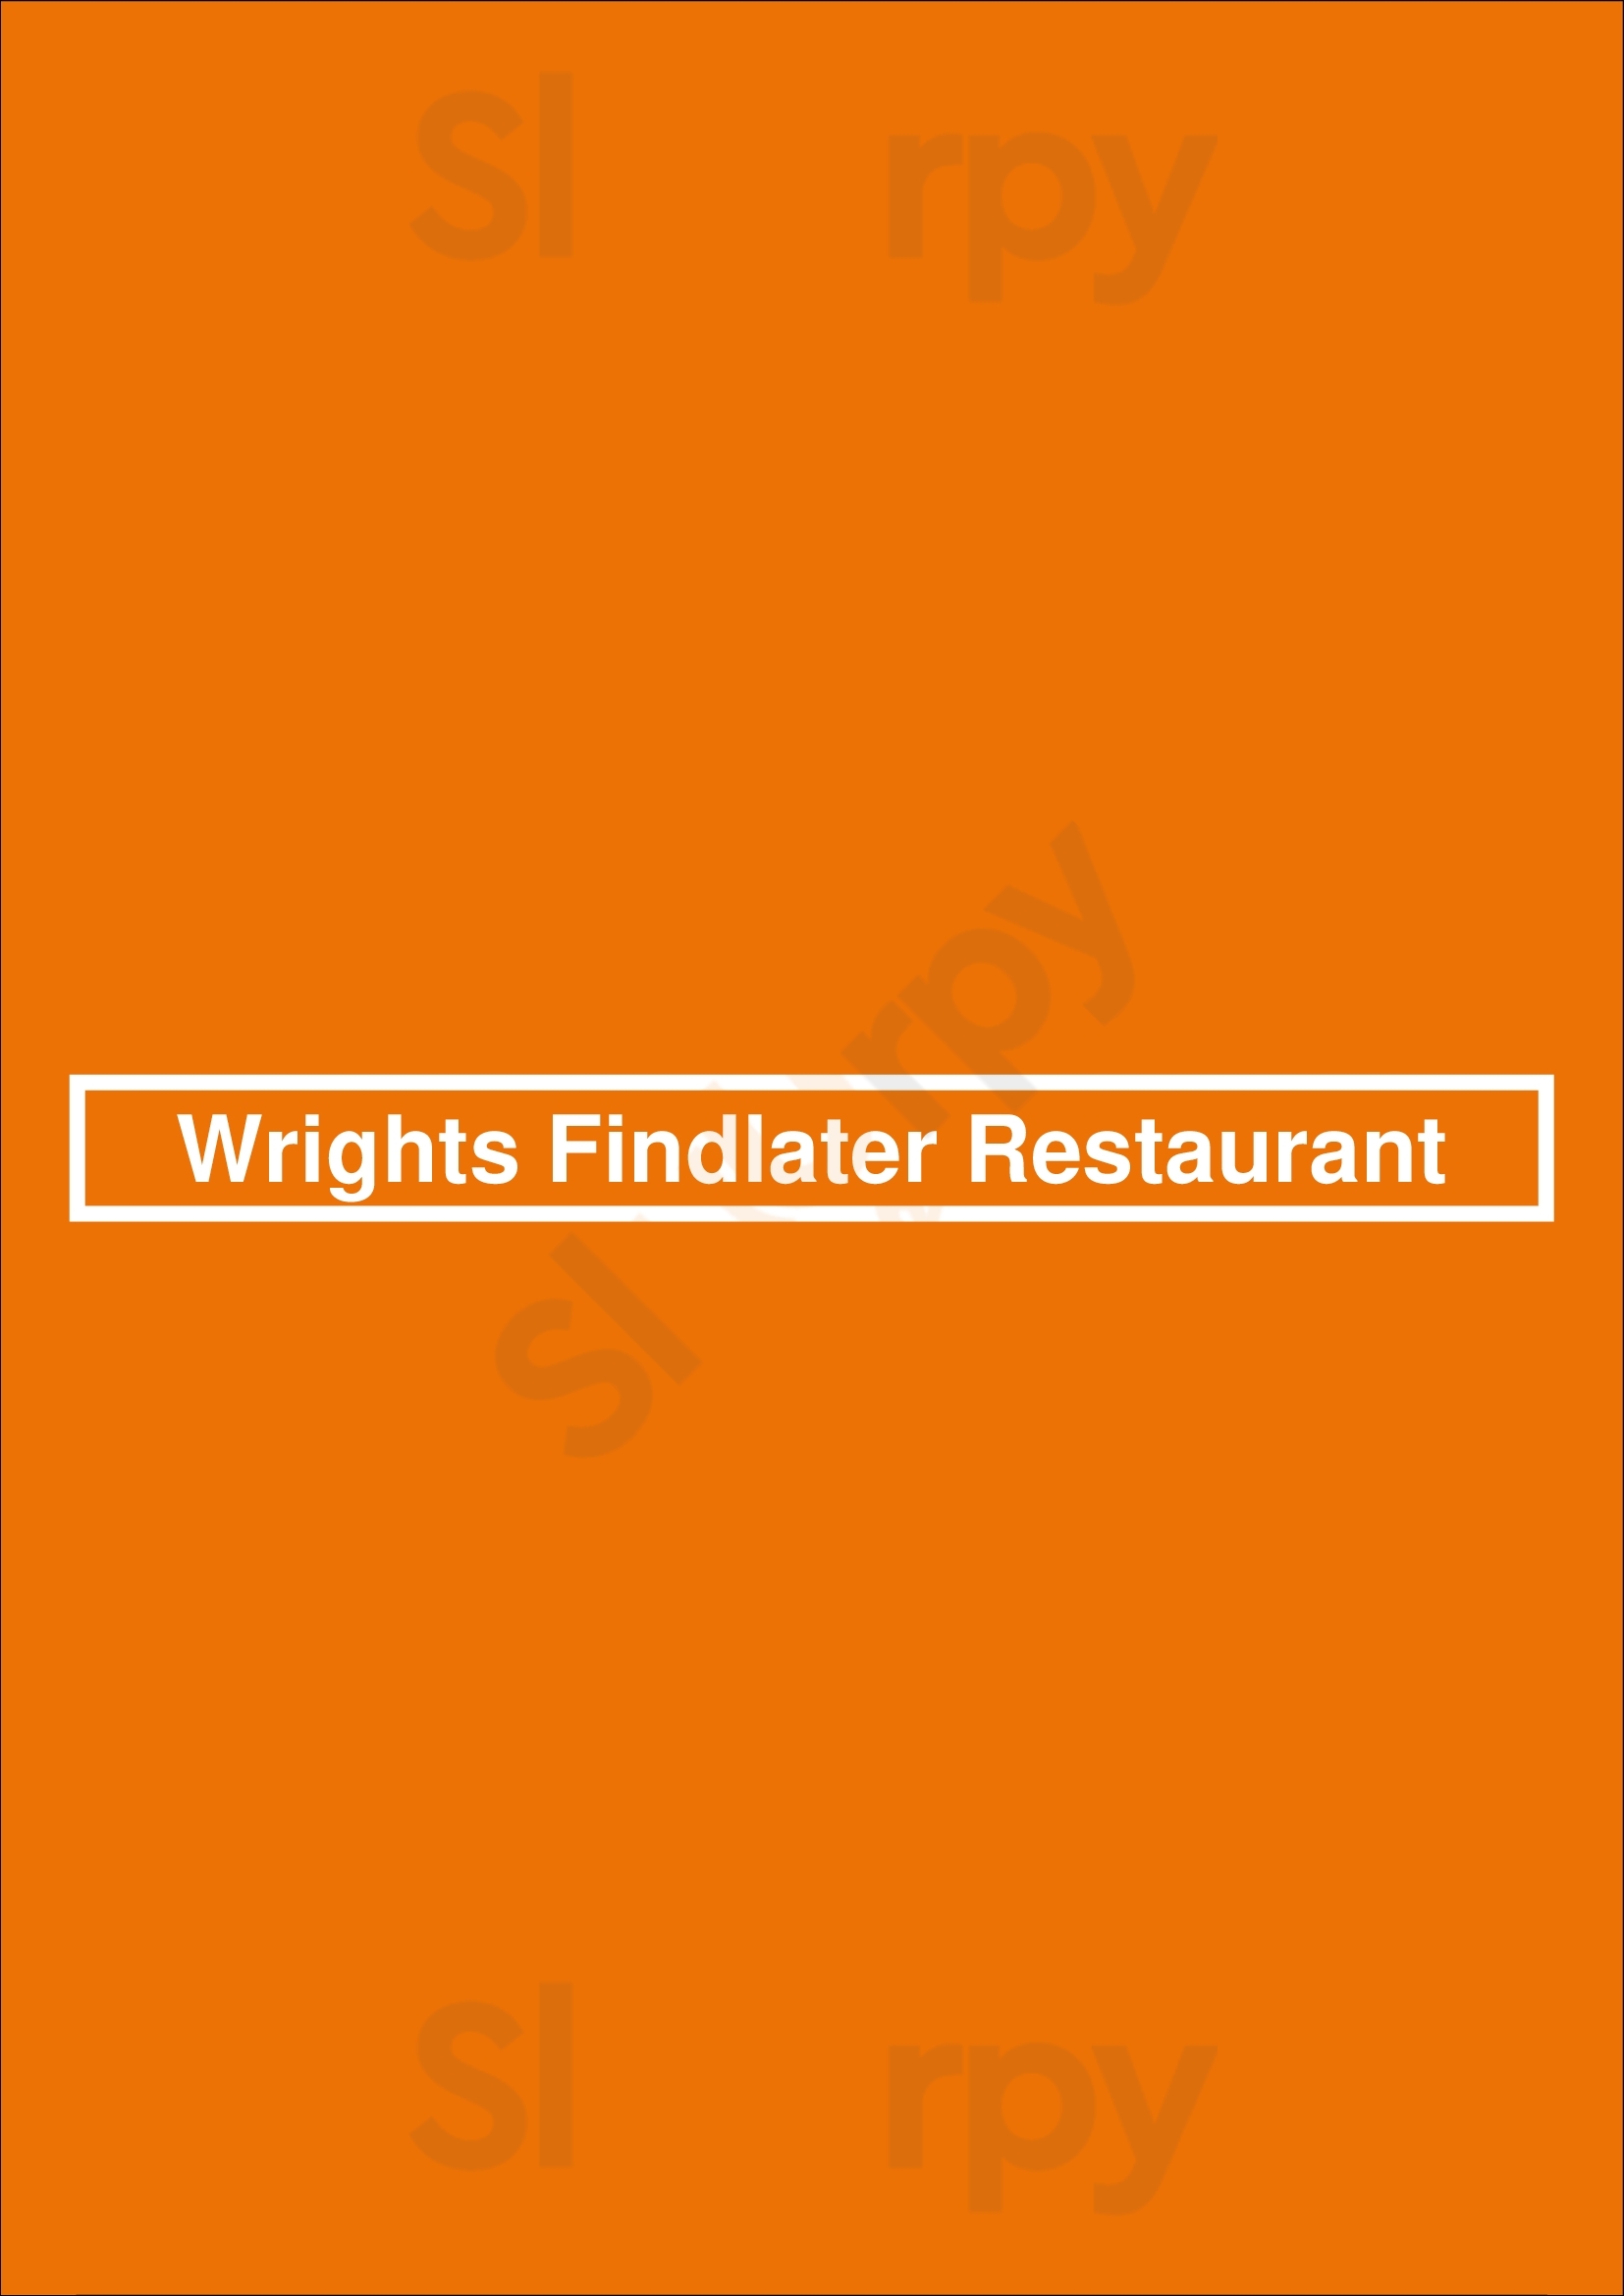 Wrights Findlater Restaurant Howth Menu - 1